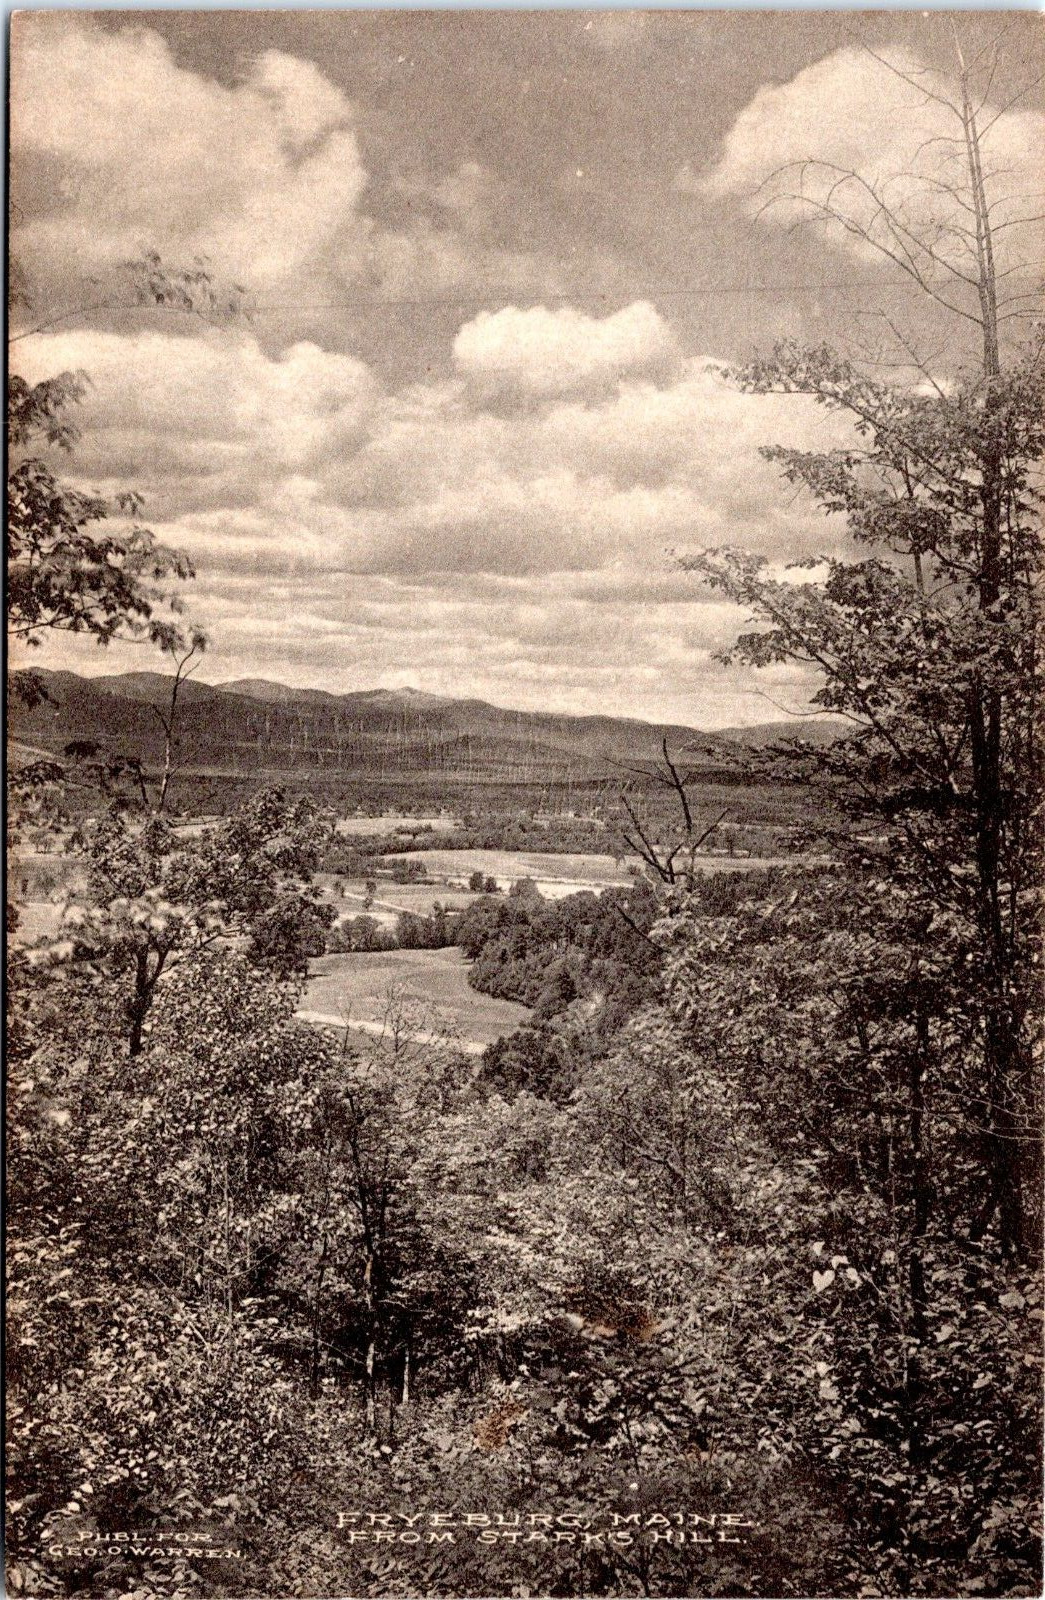 Fryeburg, Maine from Starks Hill - Albertype Photo Postcard